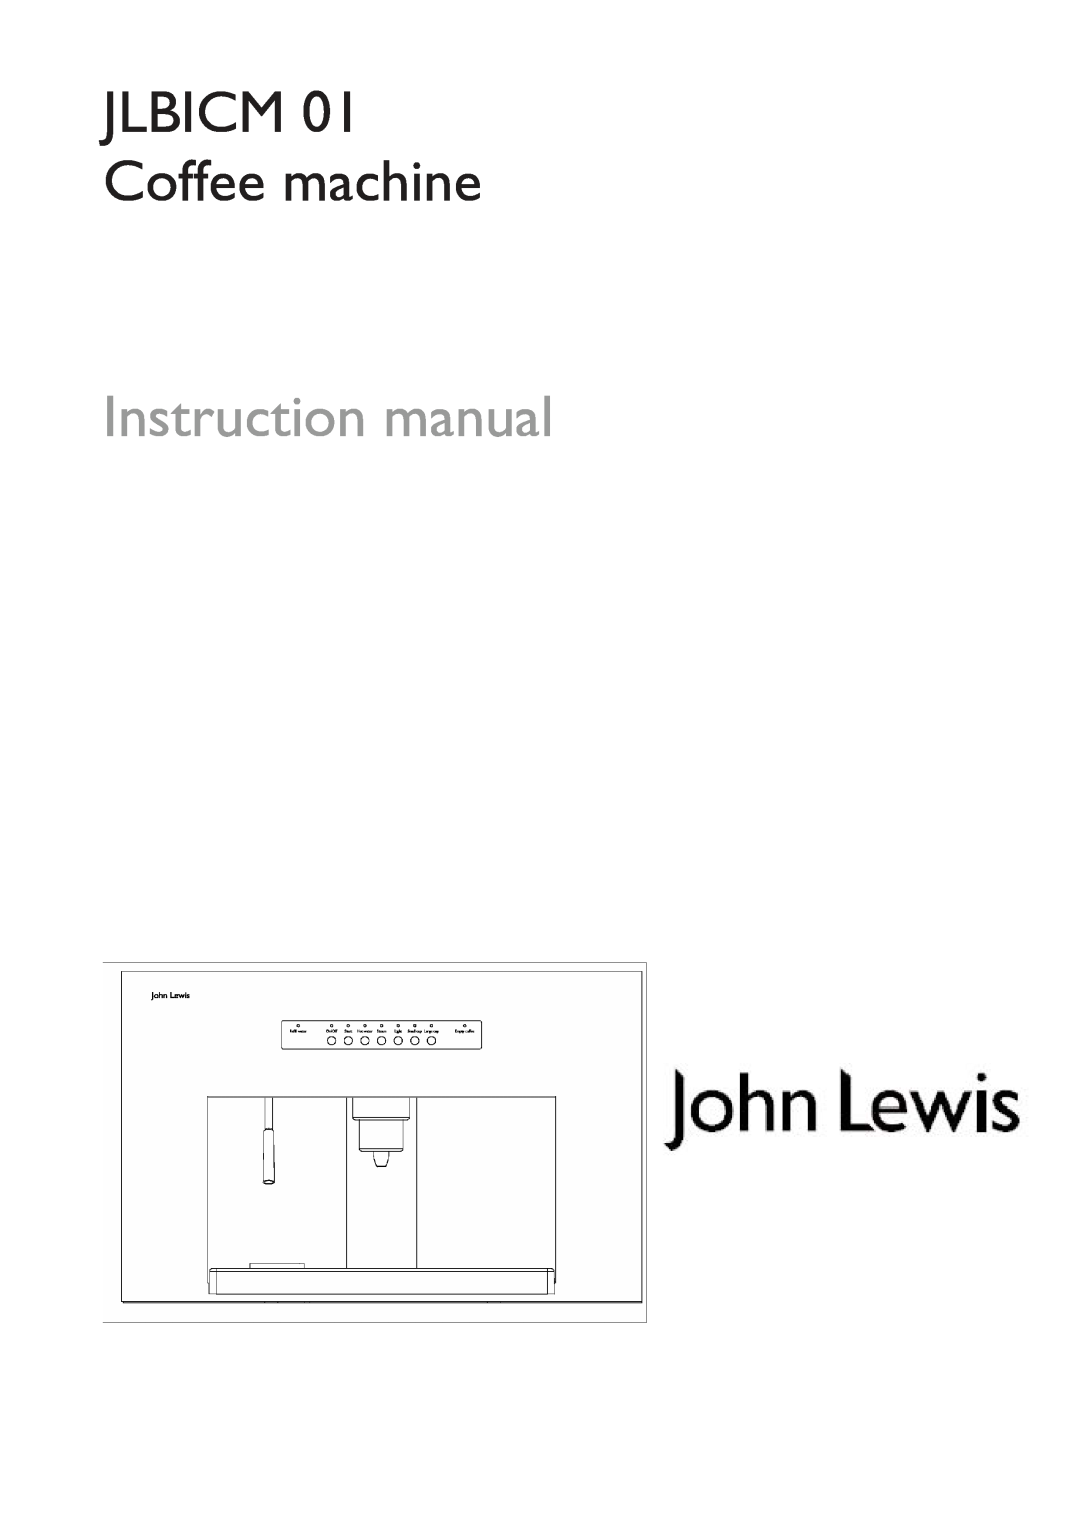 John Lewis instruction manual Instruction manual, JLBICM 01 Coffee machine 